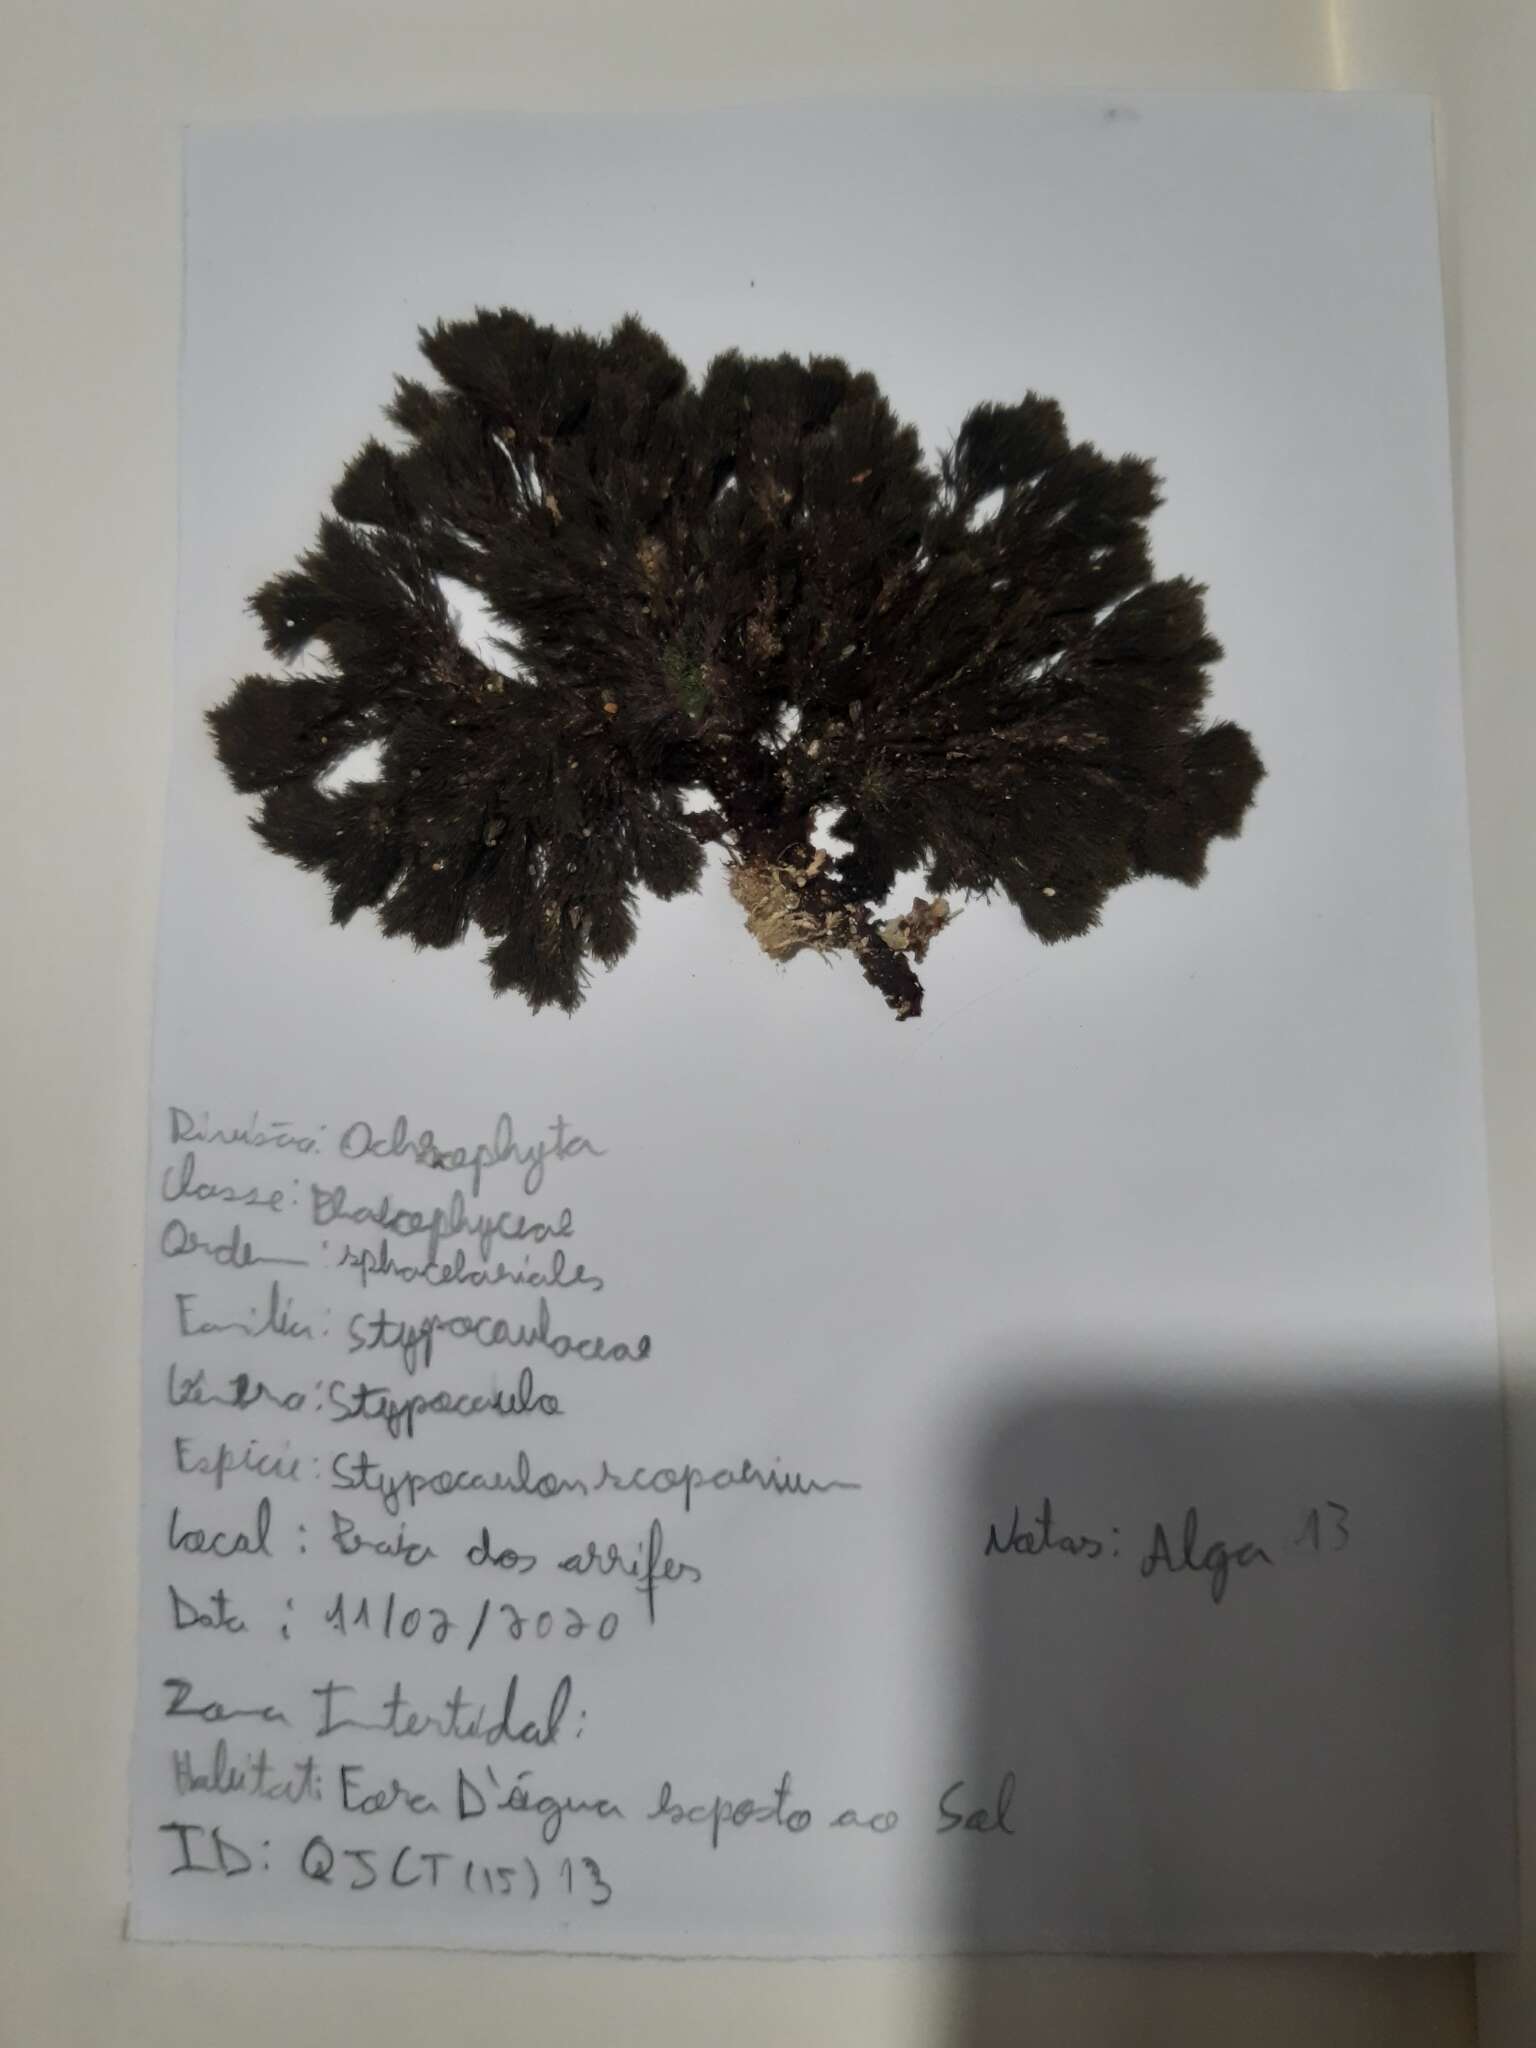 Plancia ëd Stypocaulaceae